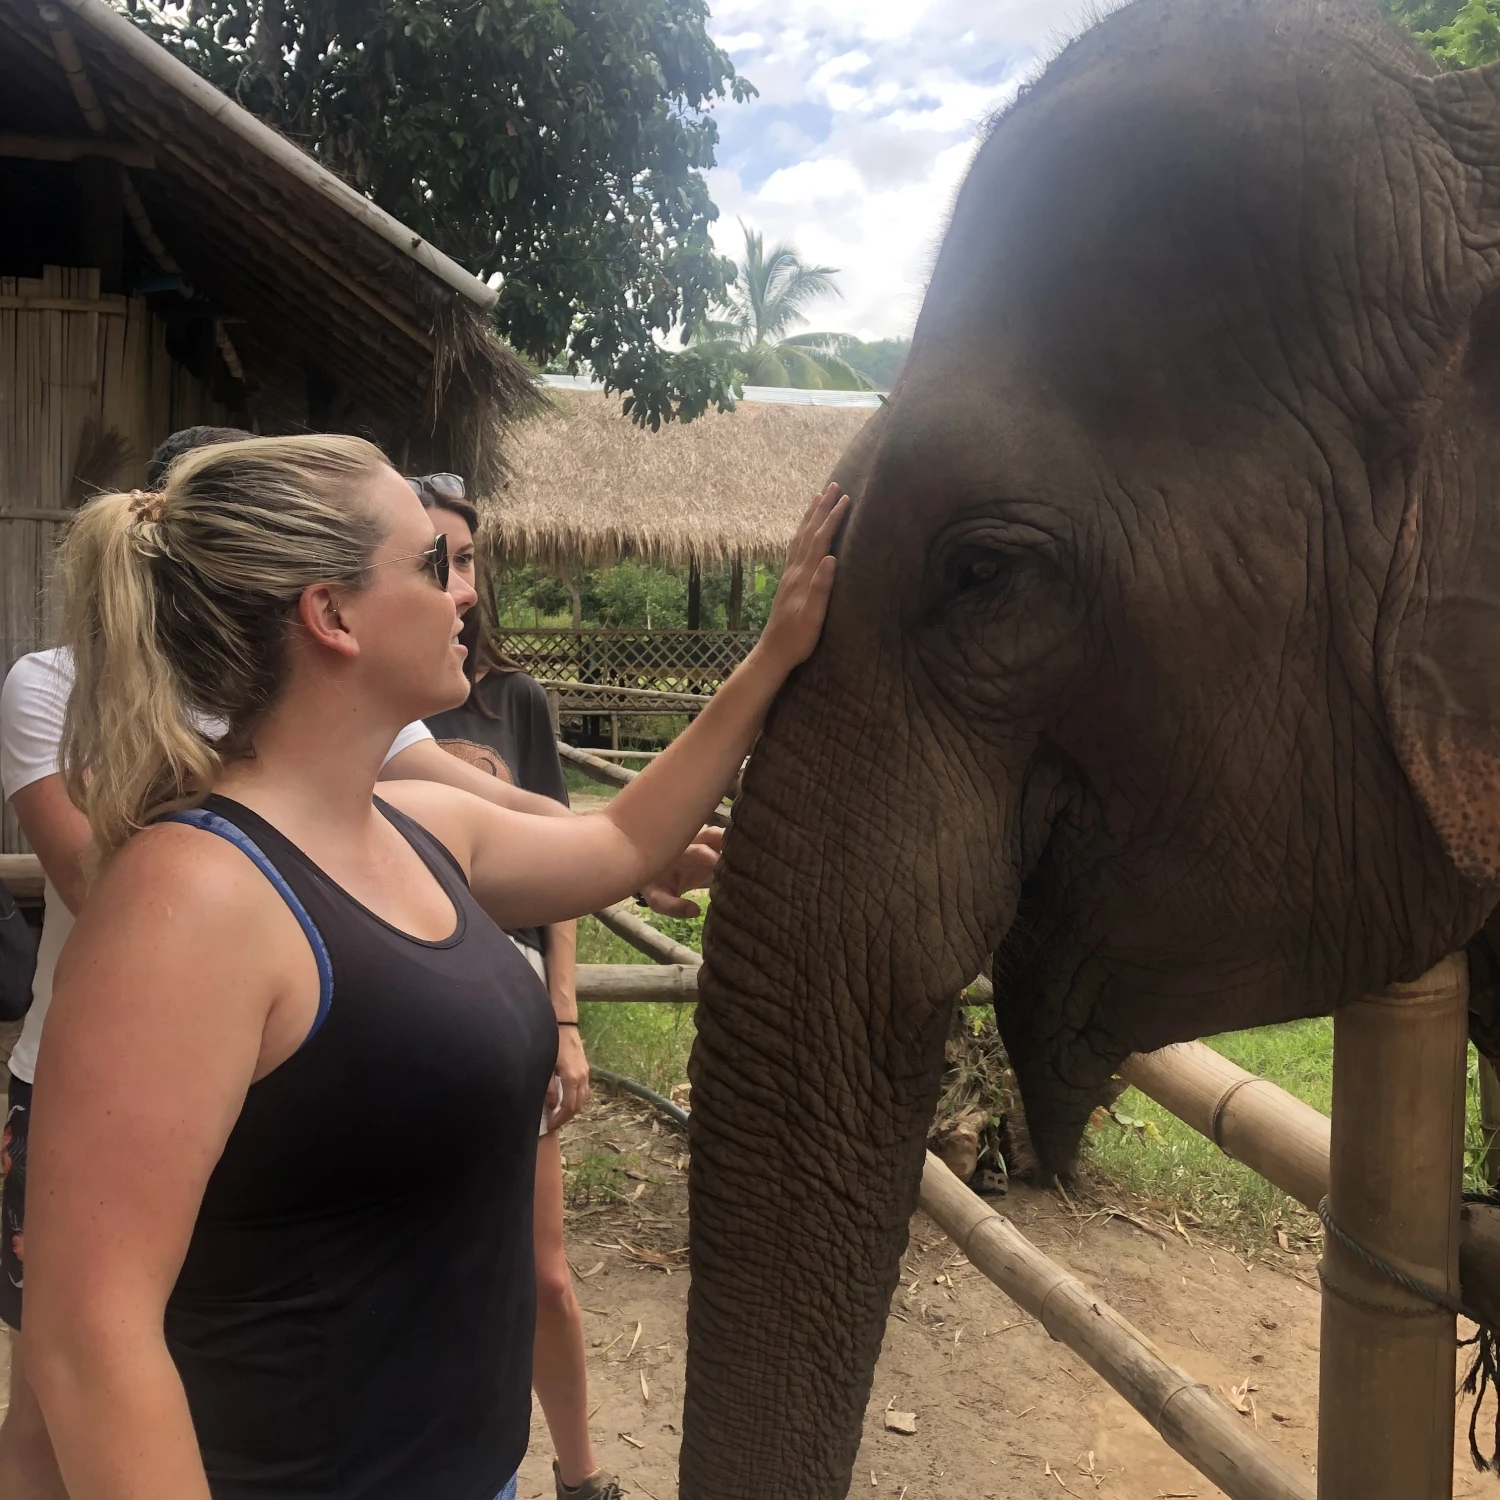 Travel advisor posing with an elephant